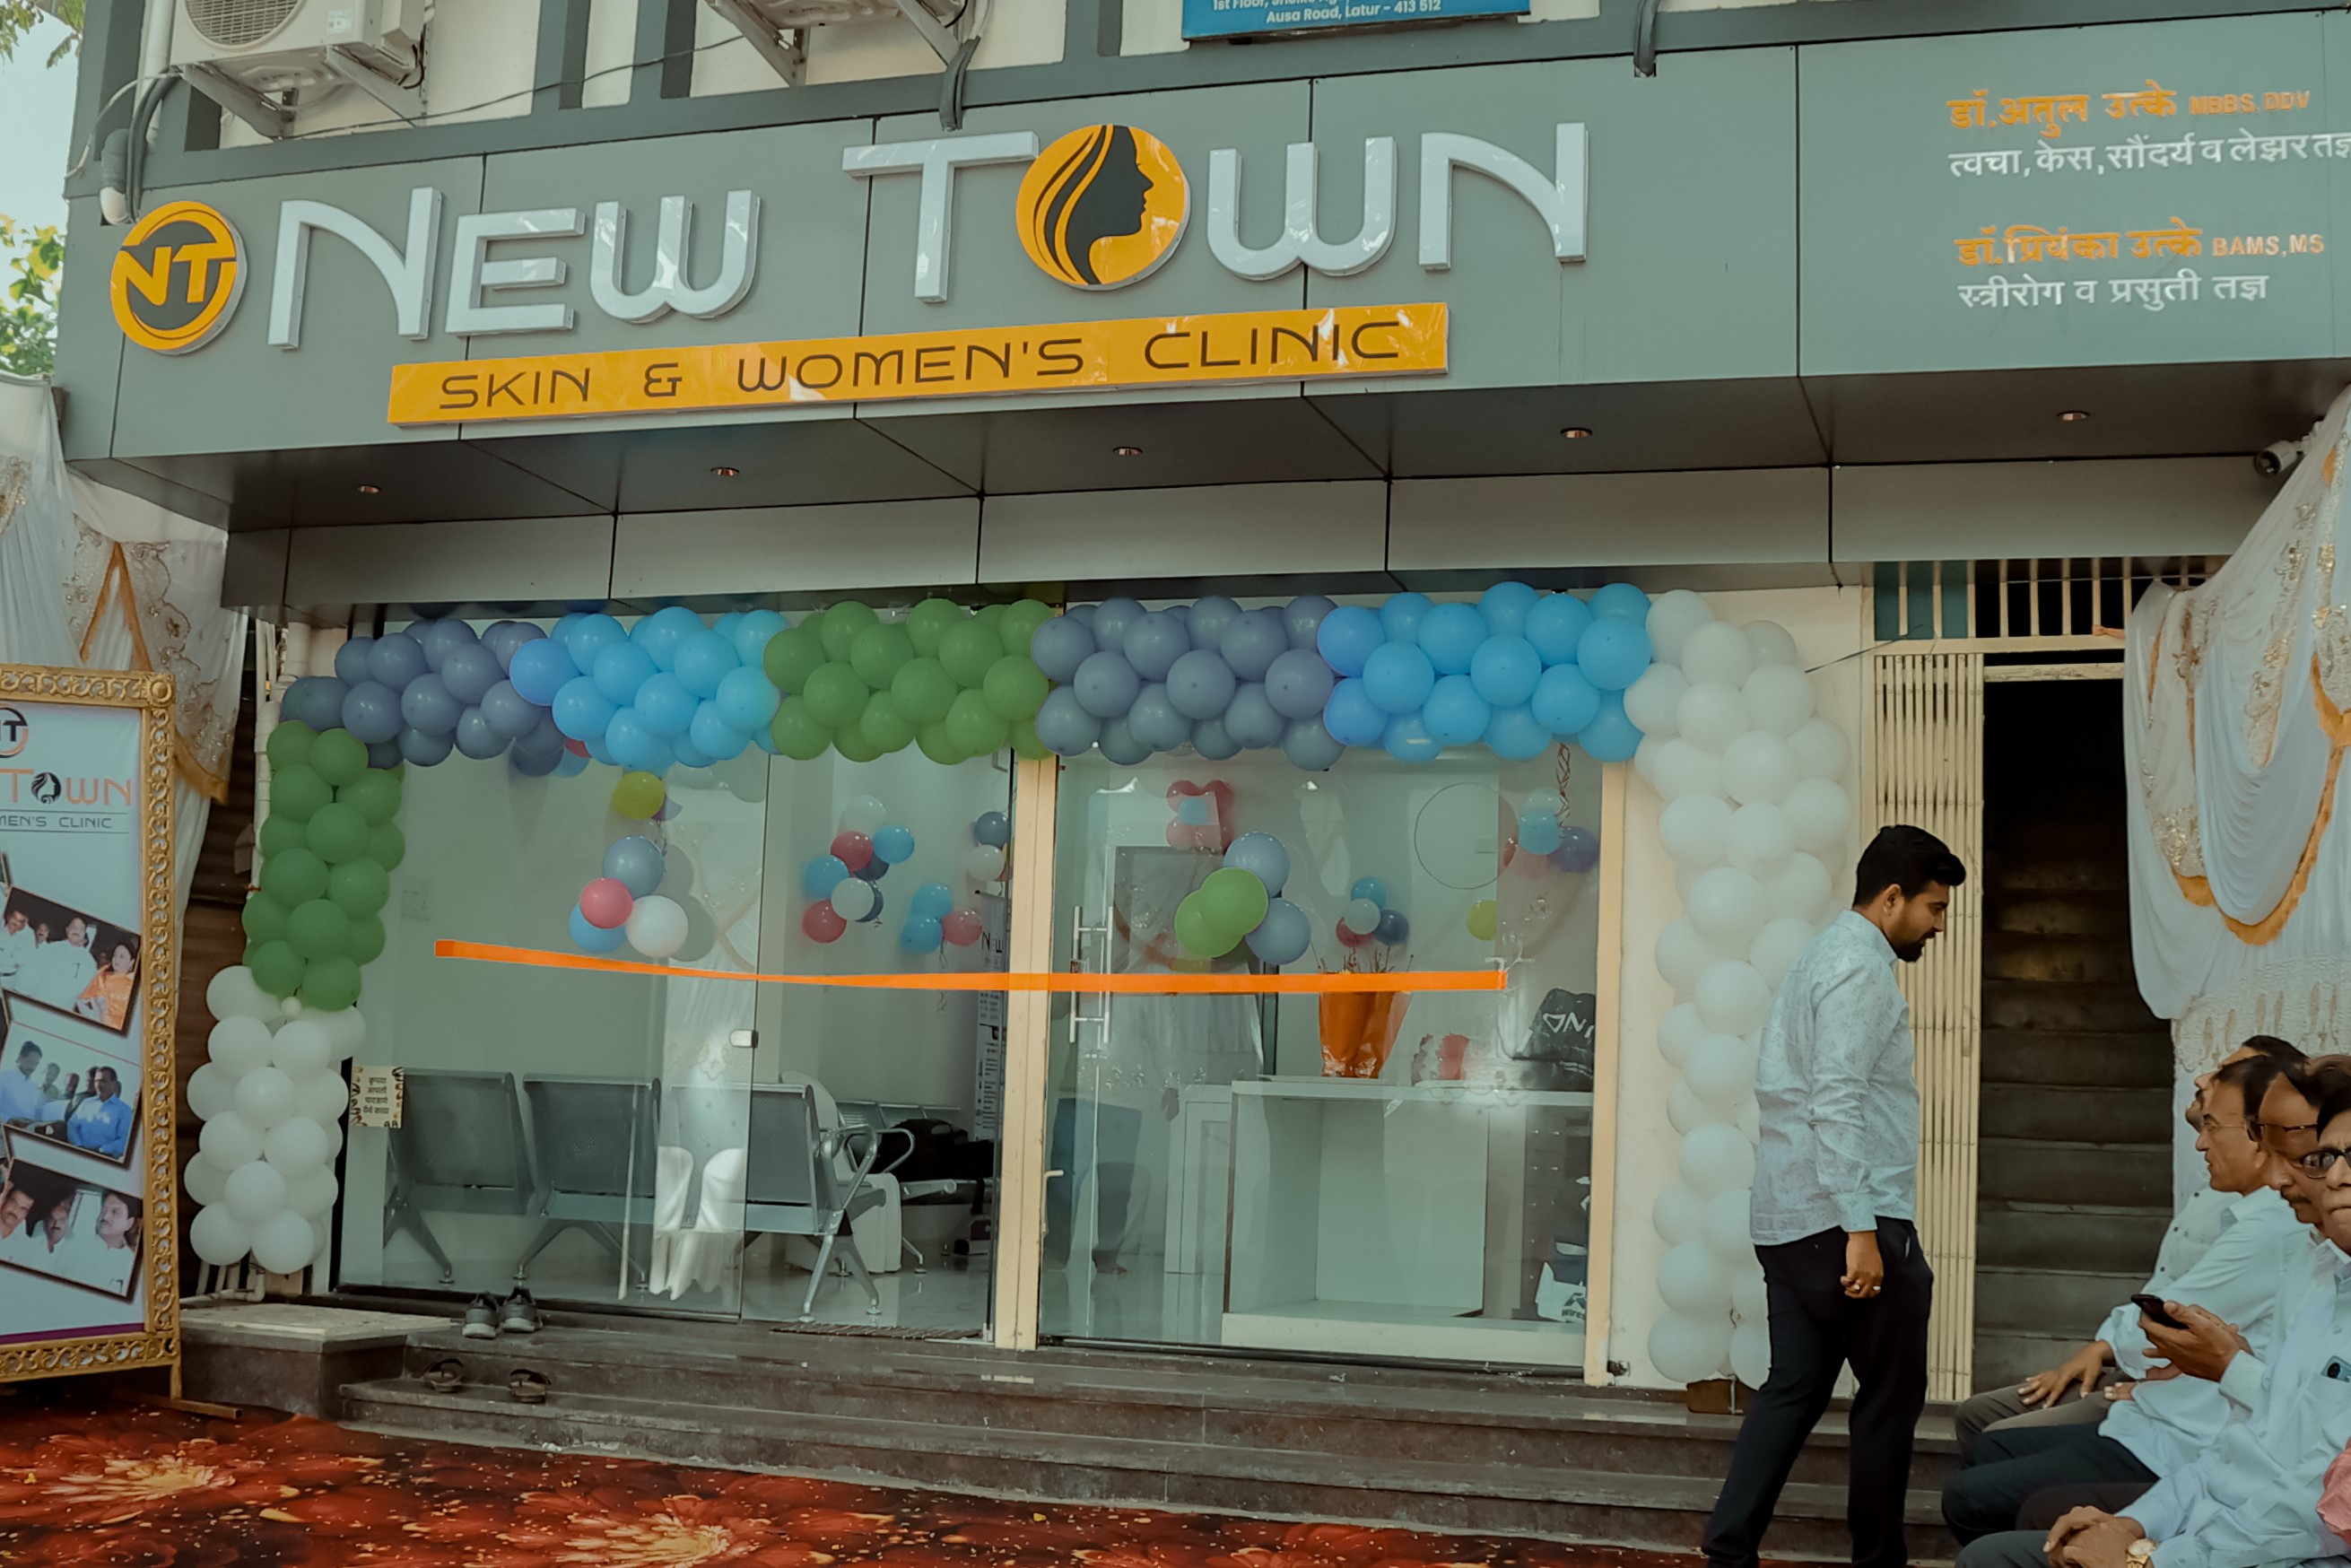 New Town Skin & Women's Clinic - 198